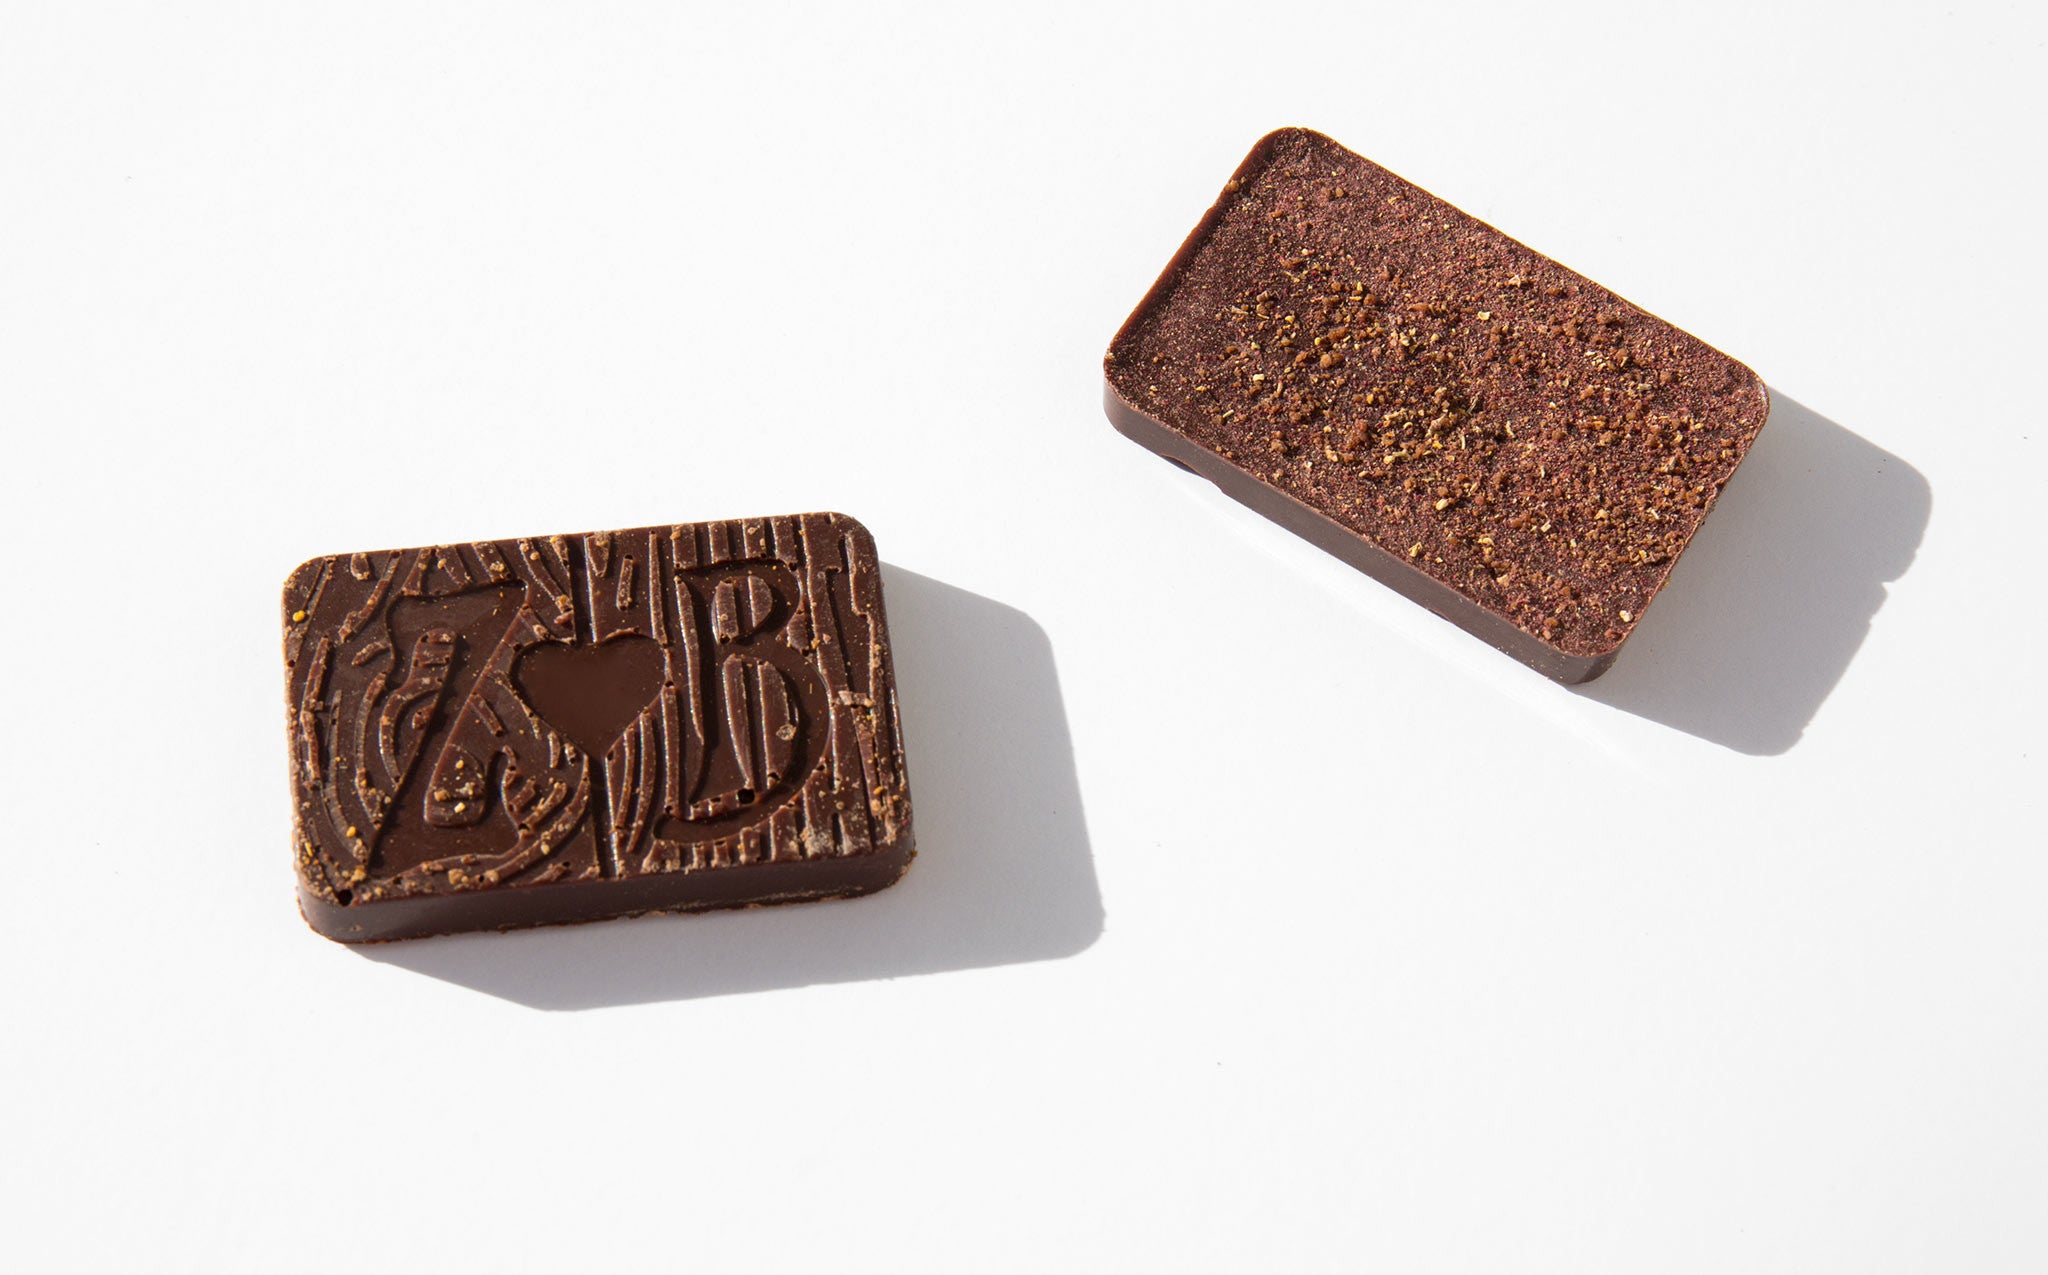 Zenbunni Biodynamic Chocolates